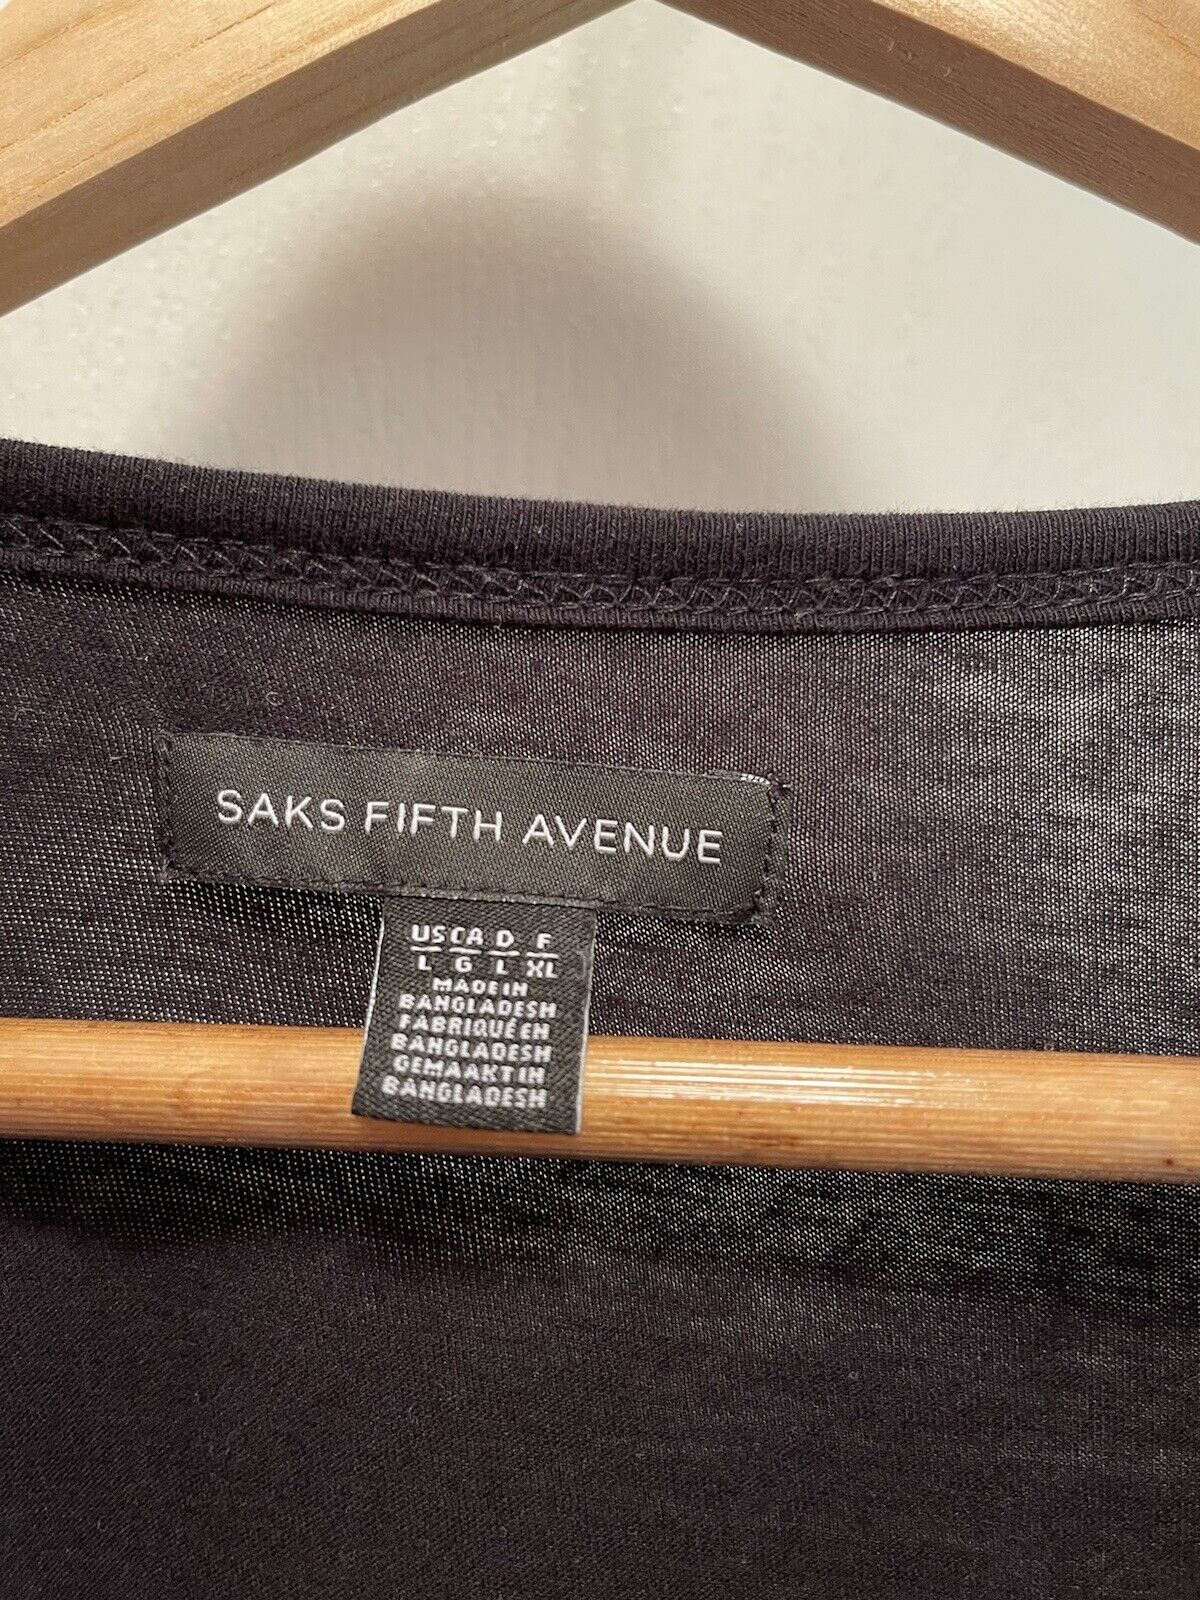 Saks Fifth Avenue Long Dress - image 3